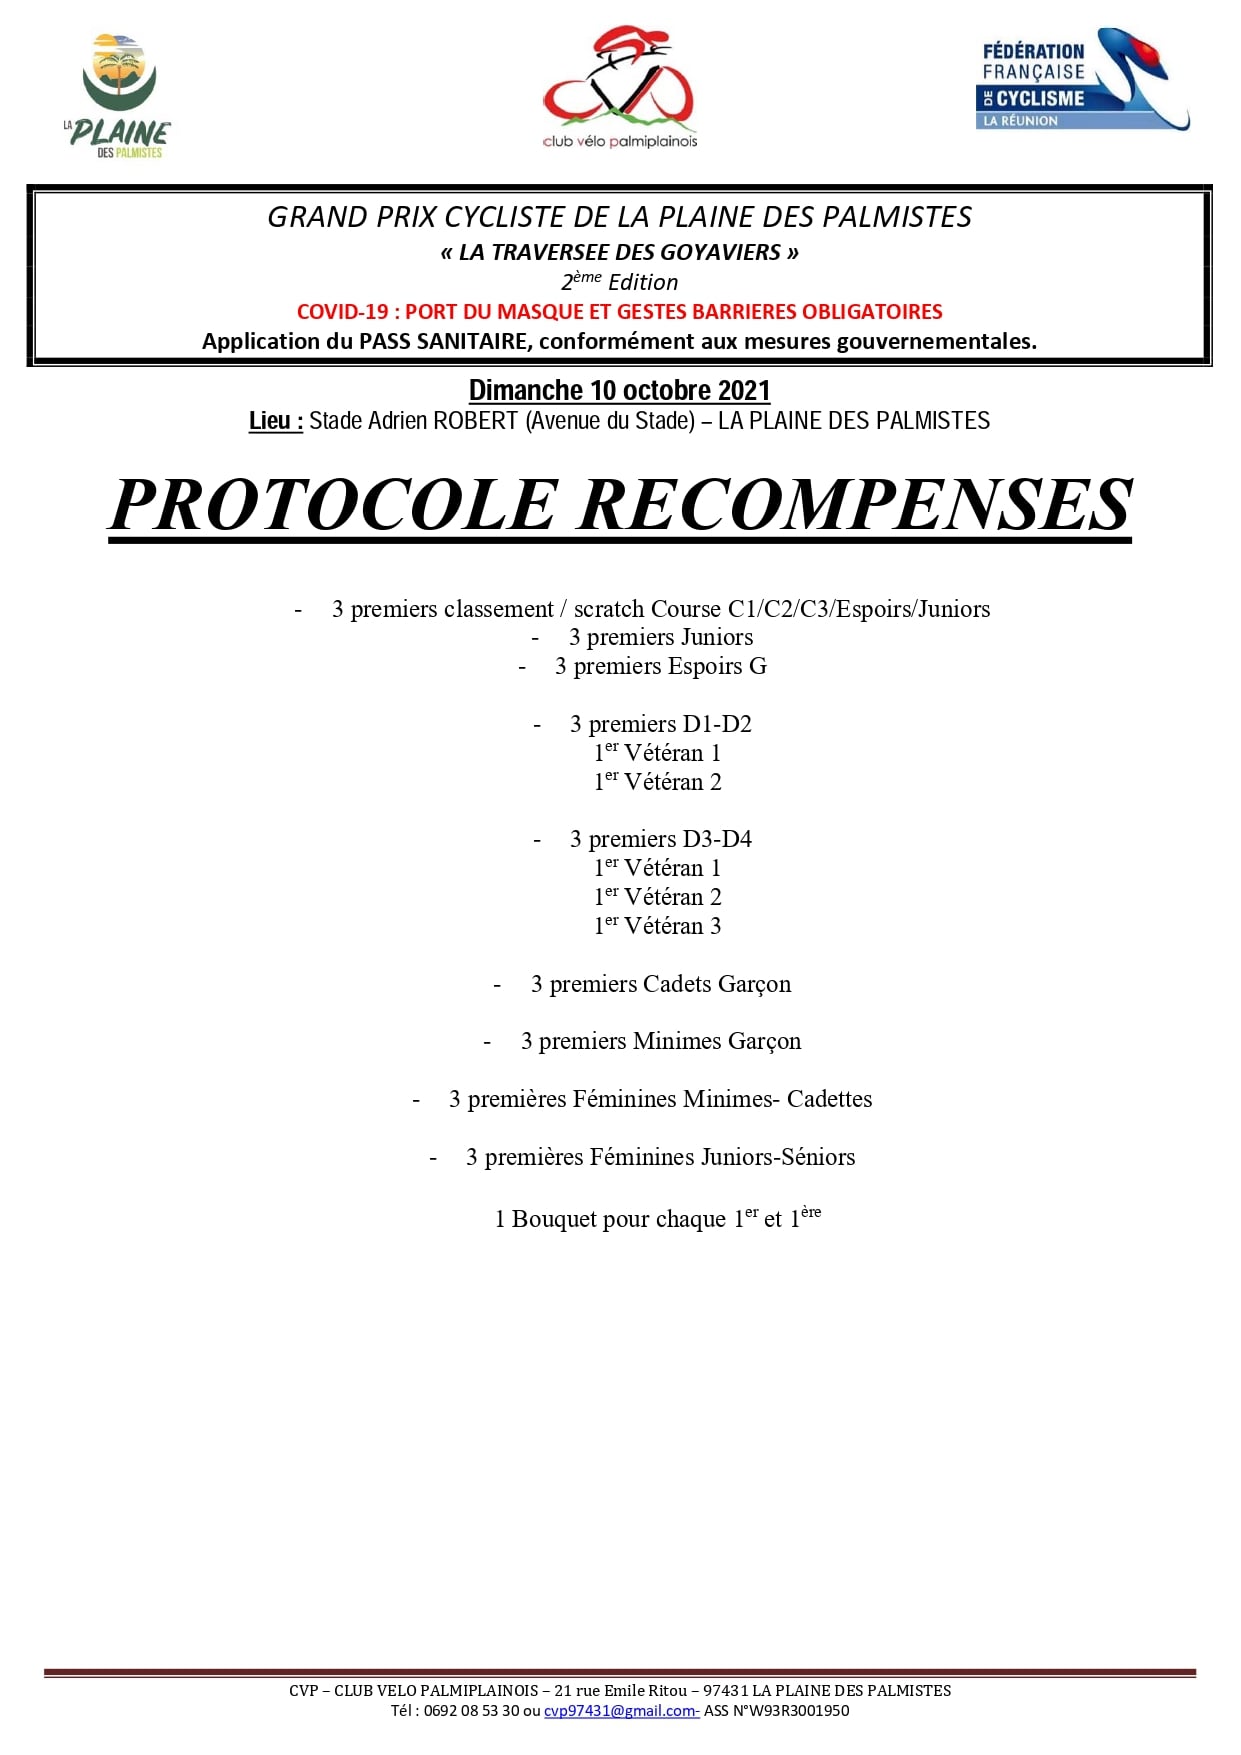 Reglt-Part-GP-Plaine-Palmistes-Traversee-Goyaviers-10.10.2021-CVP_page-0002-min.jpg